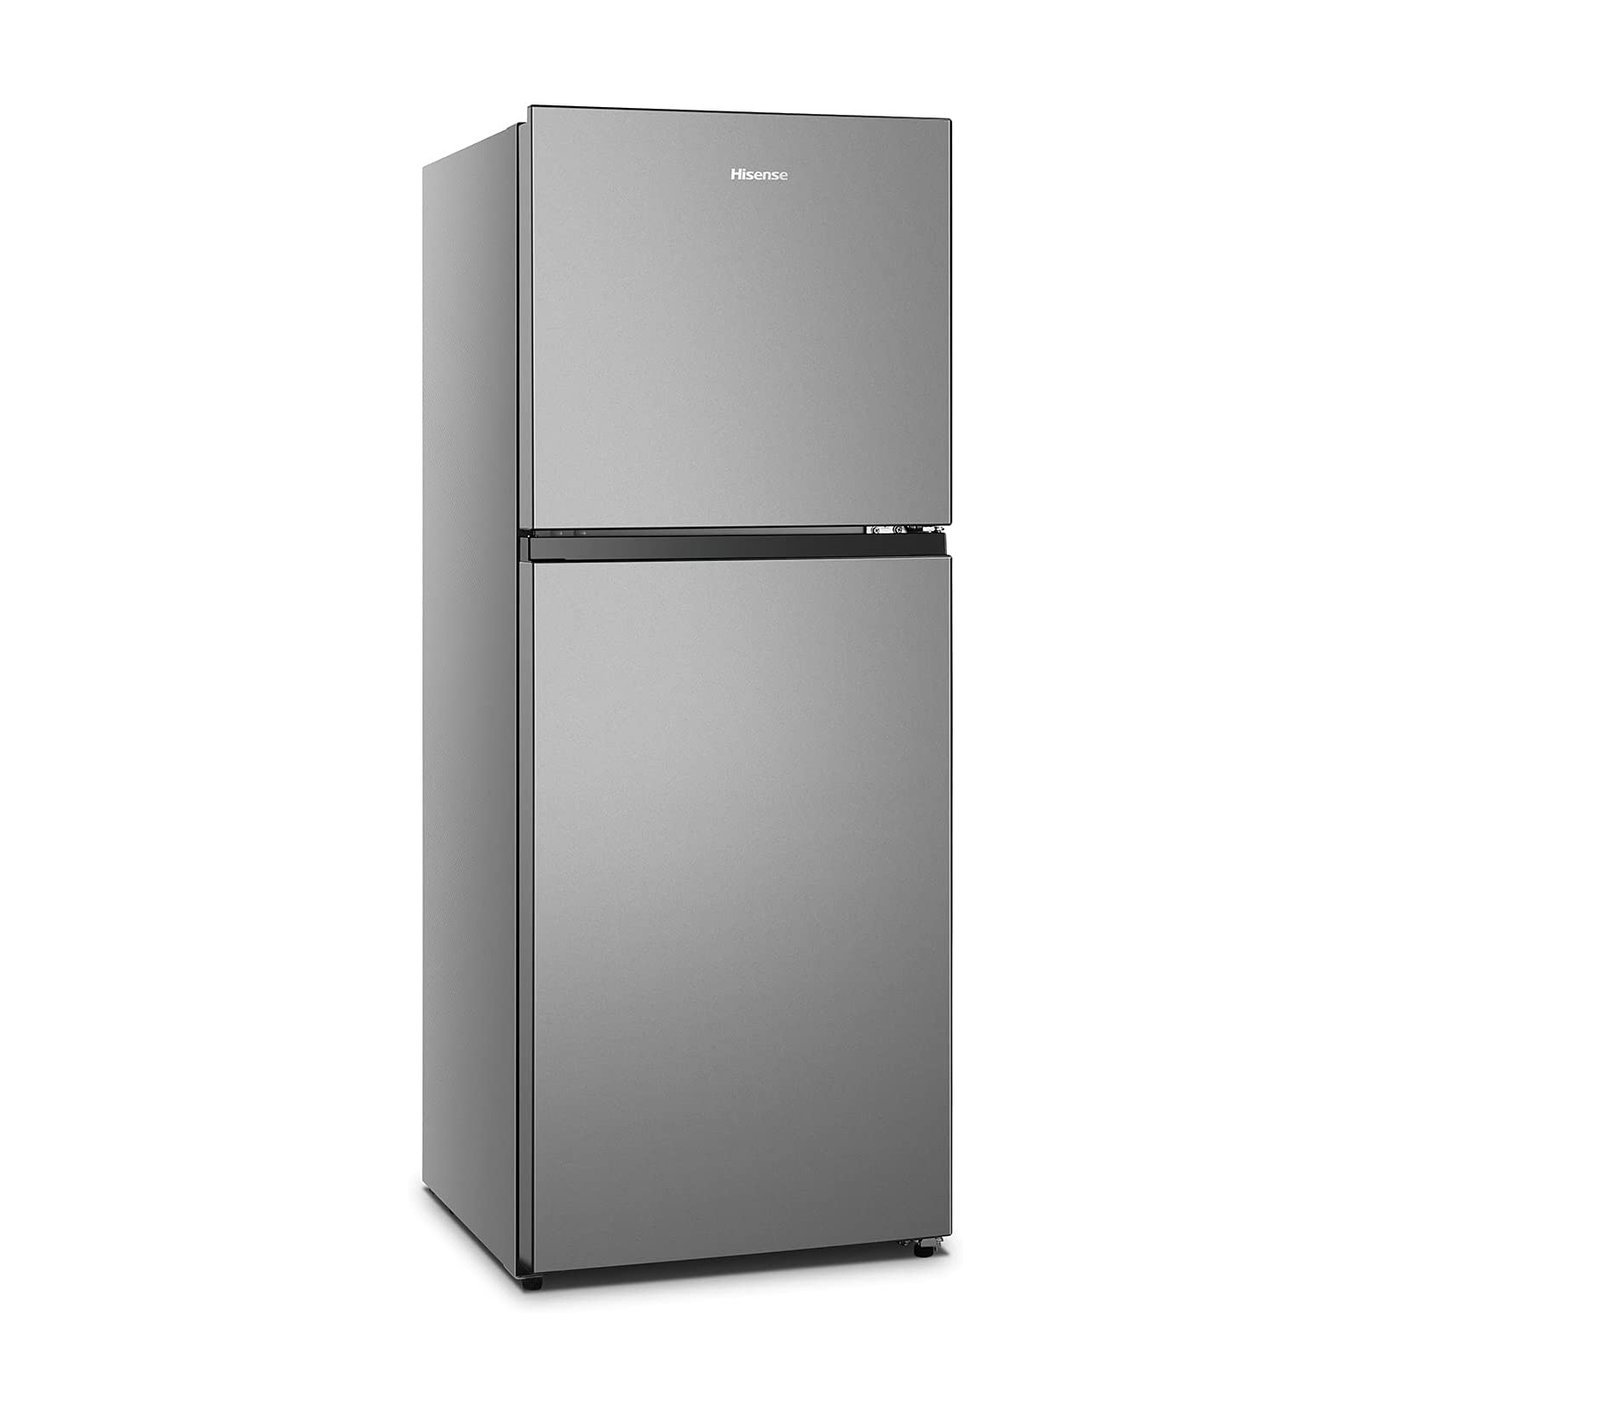 Hisense 264 Liter Refrigerator Double Door Silver Model RT264N4DGN | 1 Year Full 5 Years Compressor Warranty.